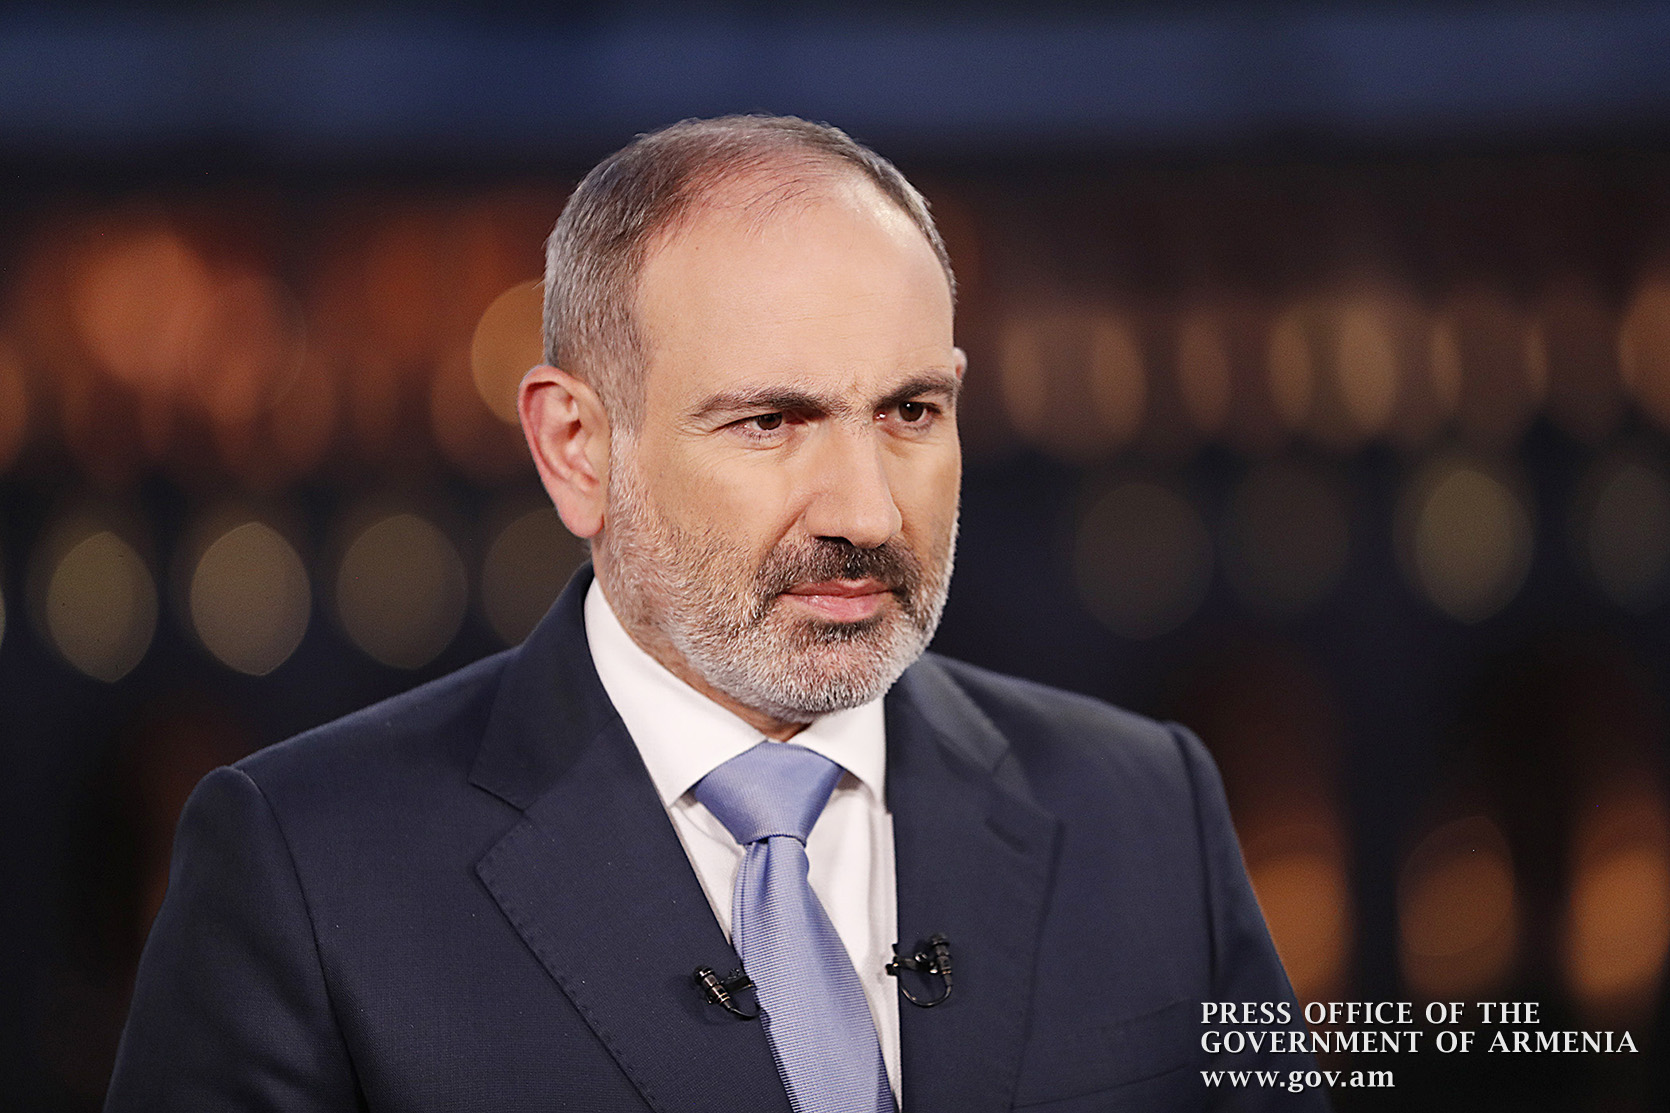 Никол пашинян. Премьер министр Армении. Никол Пашинян 2018. Пашинян и Байден.